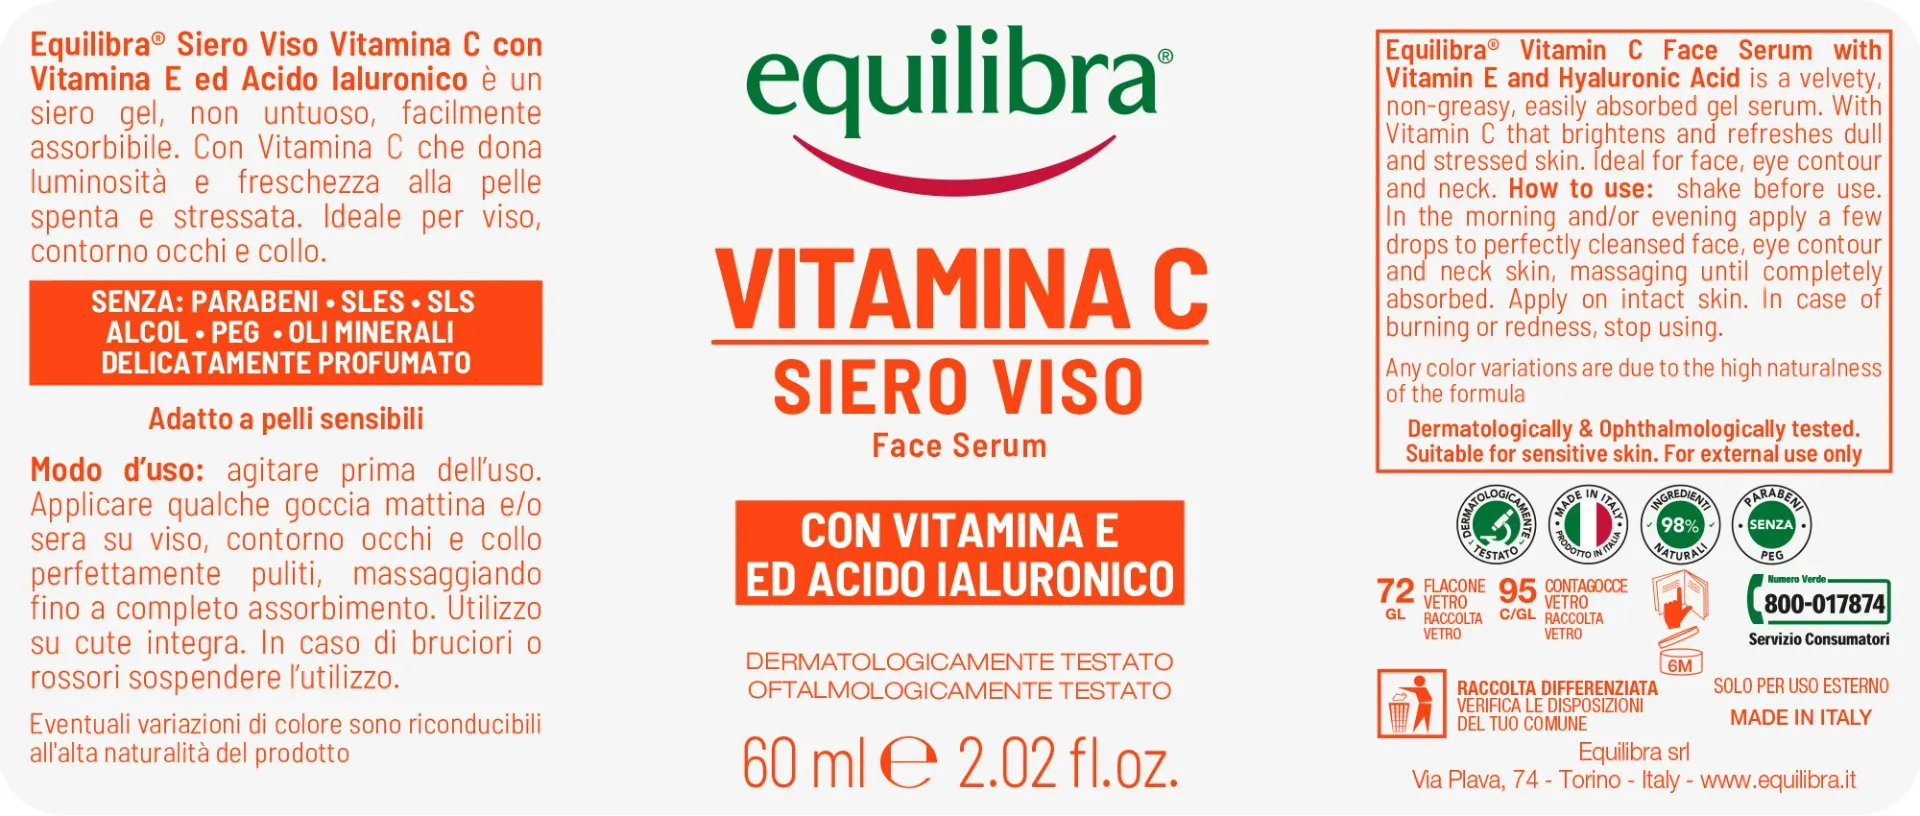 Equilibra Viso Siero Vitamina C Acido Ascorbico